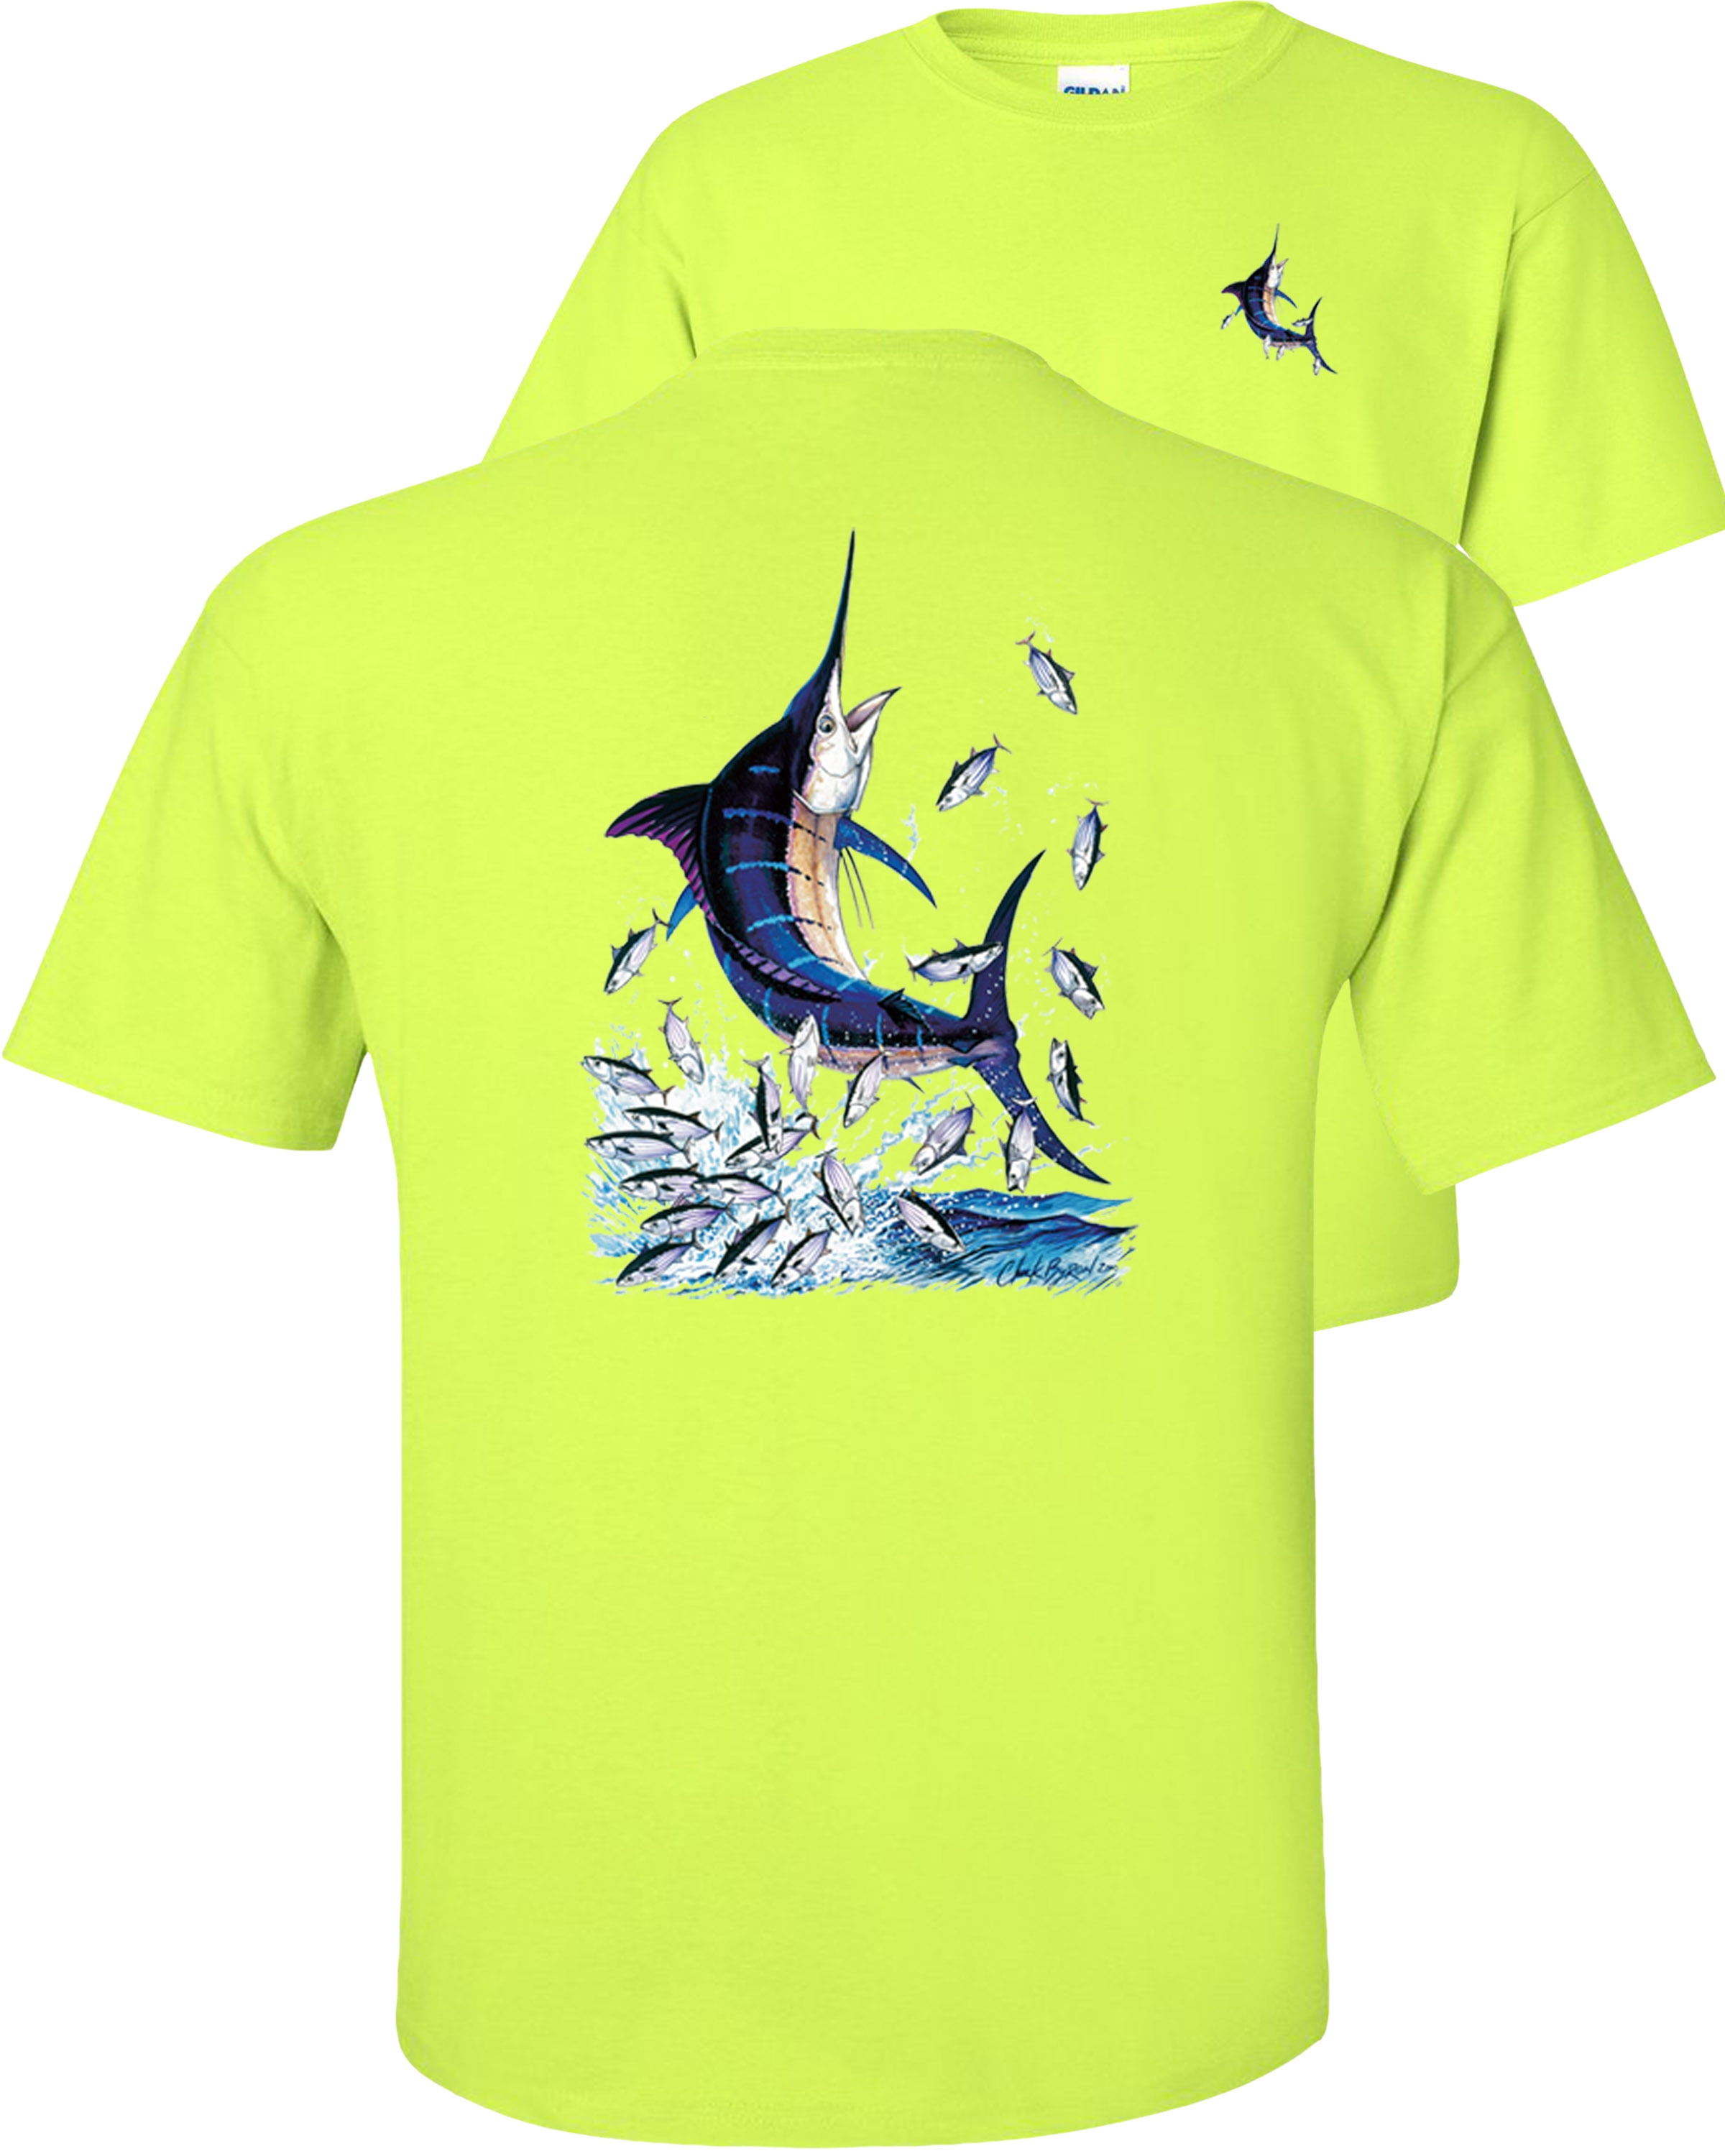 Fair Game Blue Marlin Fishing T-Shirt, Fishing Graphic Tee-Safety Green-XL  